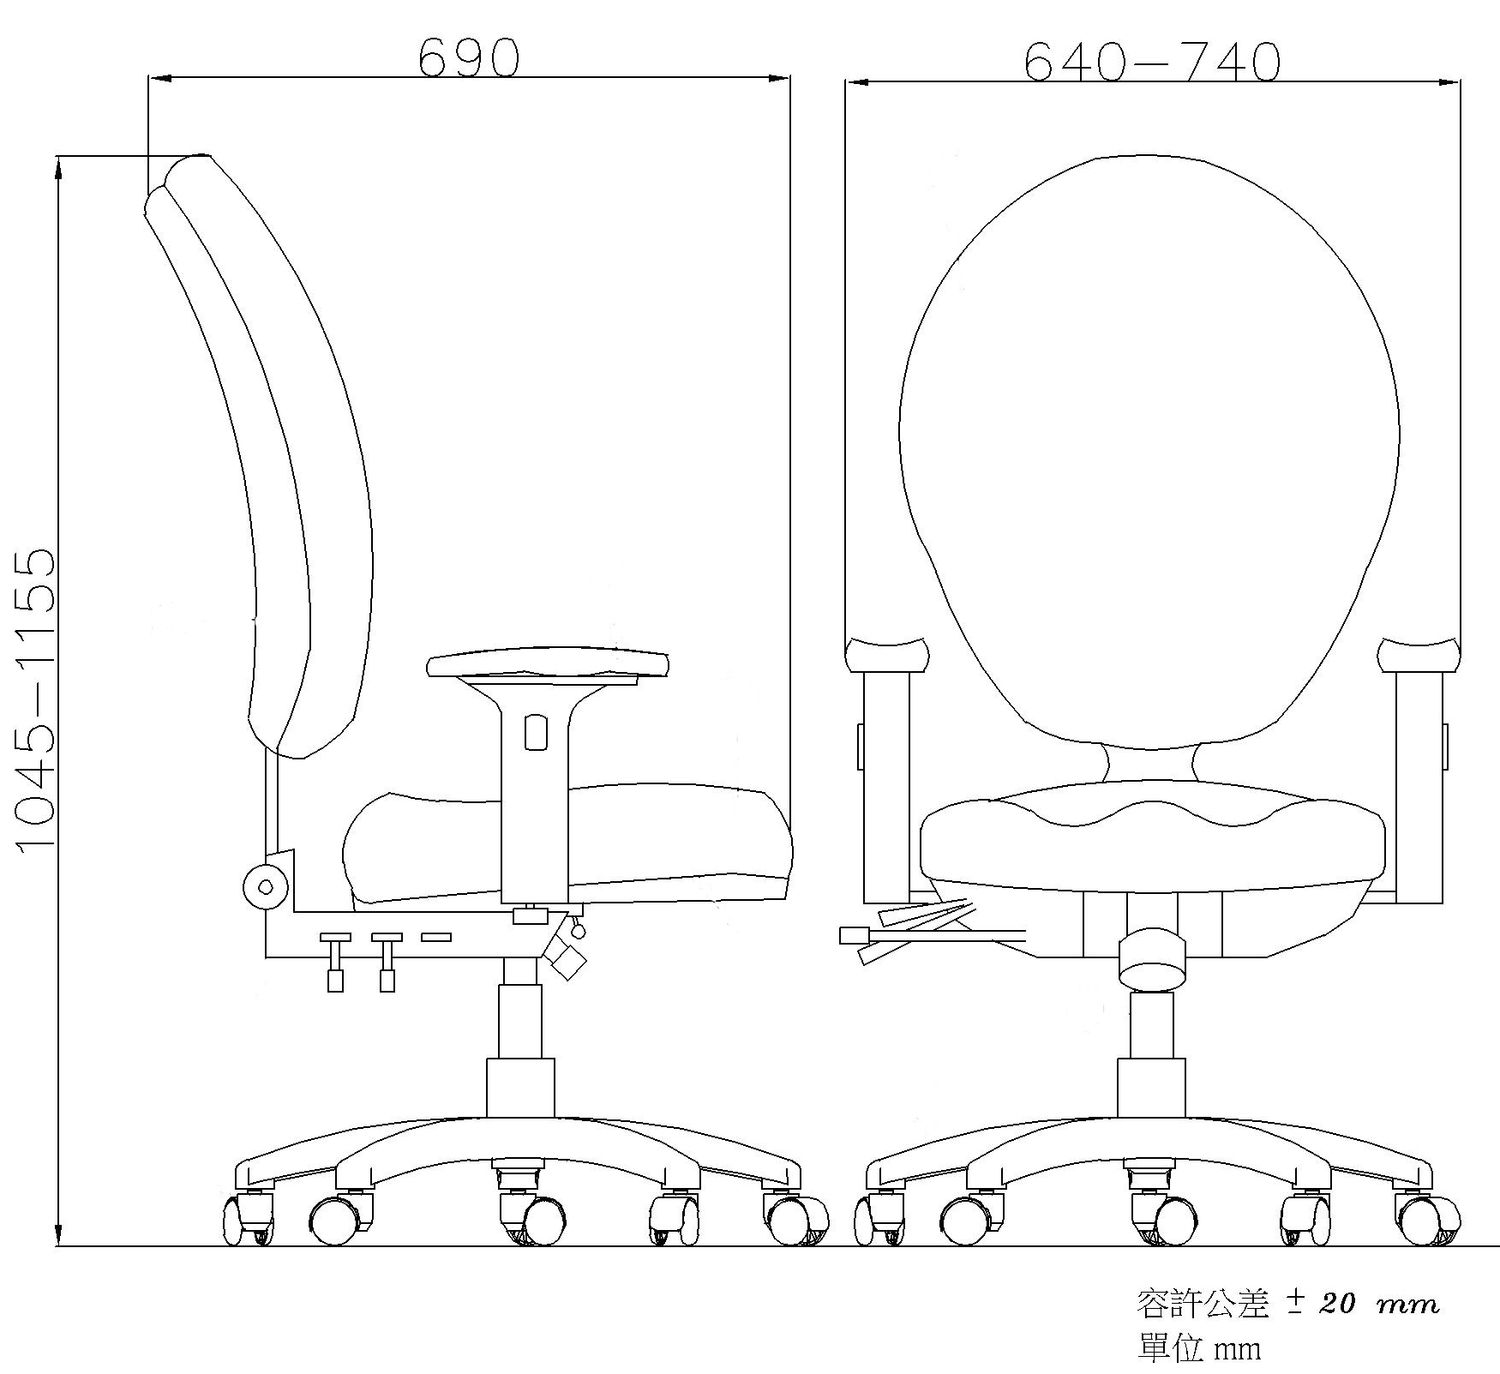 LMCS01 Multi Functional Fabric Chair